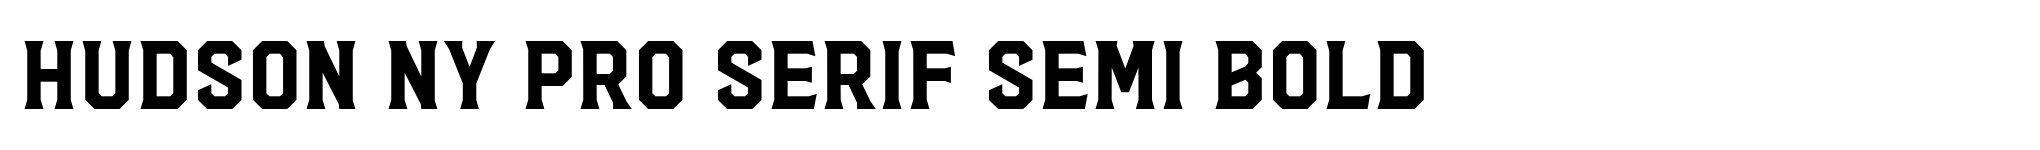 Hudson NY Pro Serif Semi Bold image